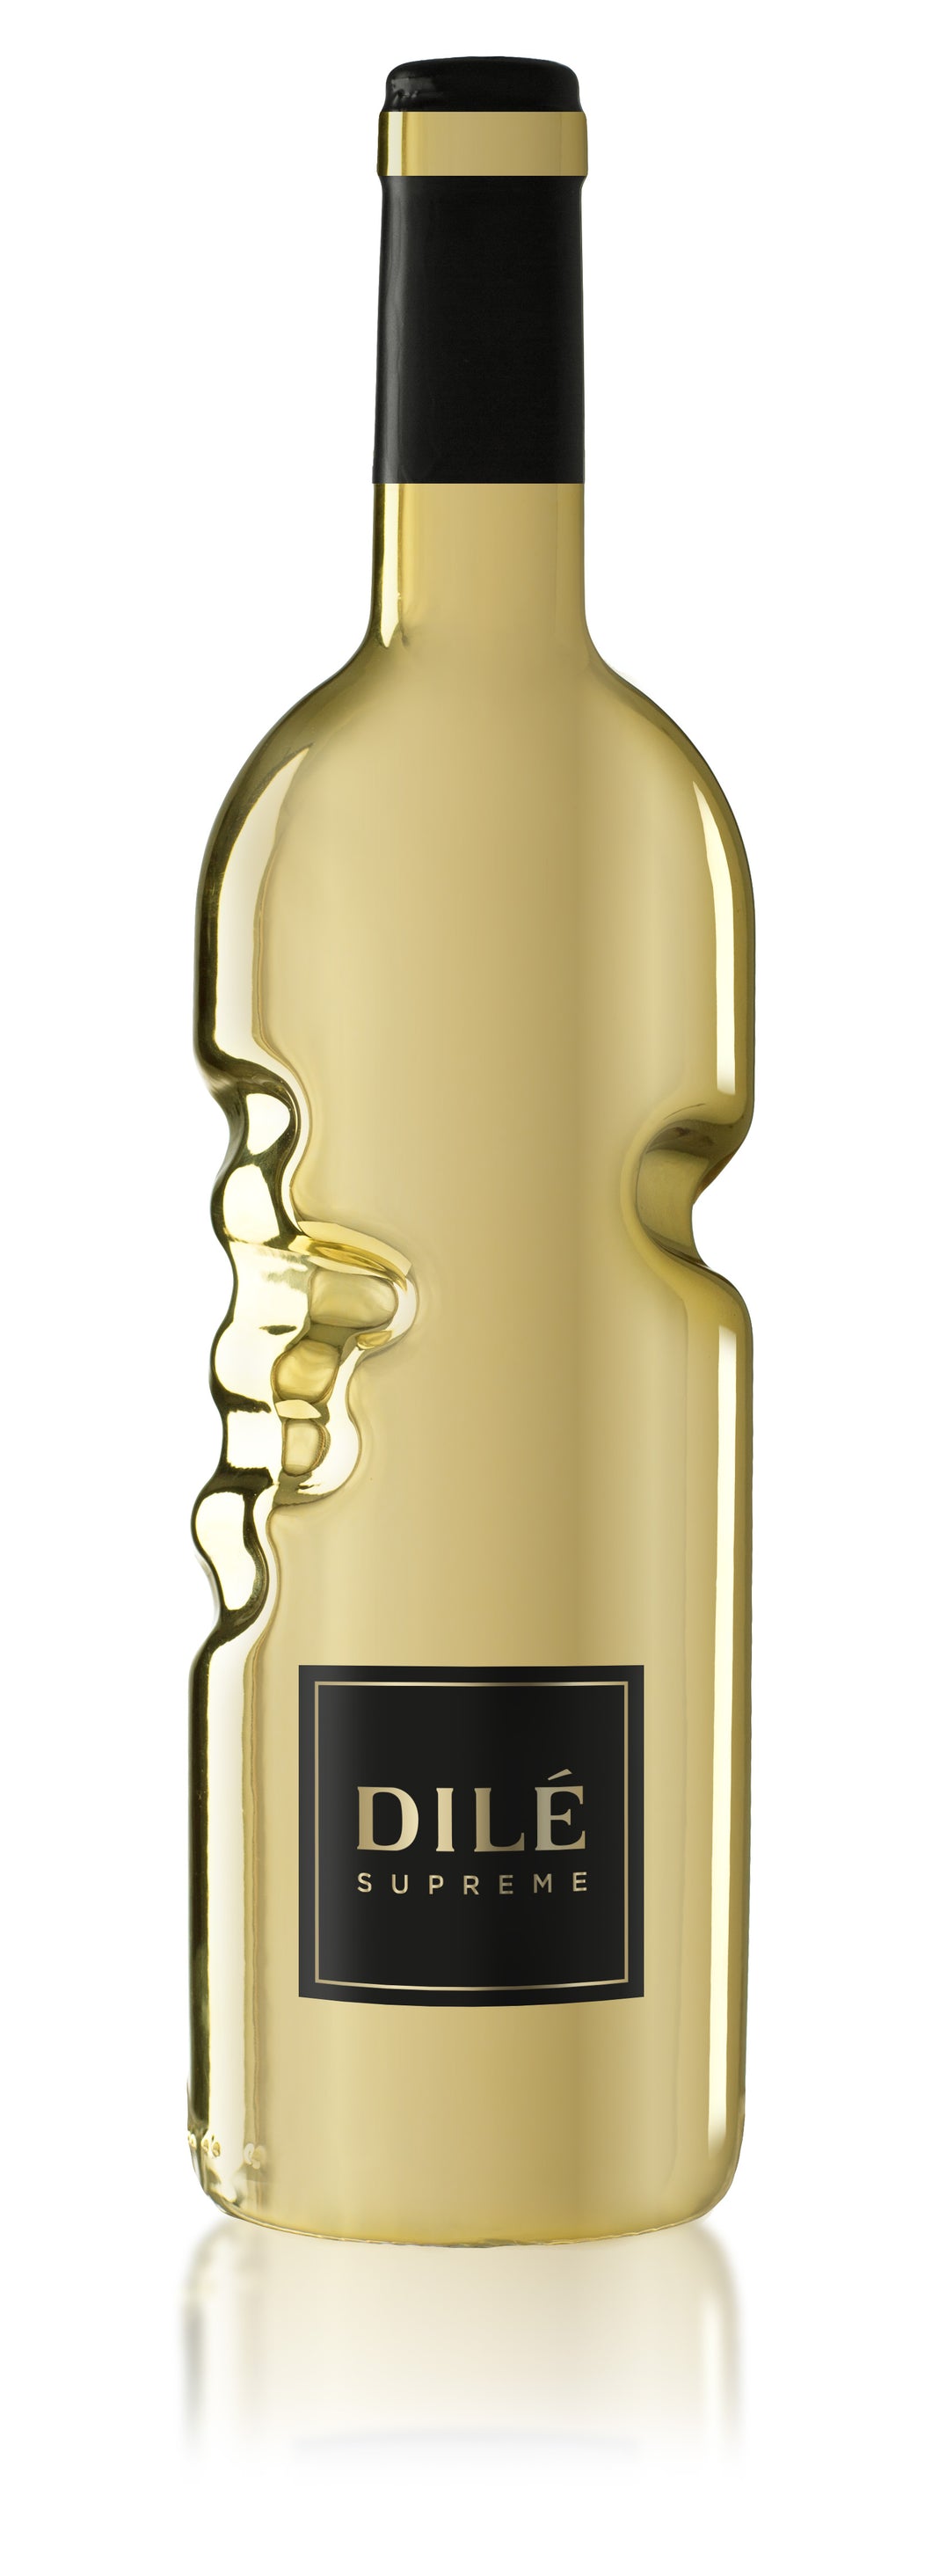 Santero Dile' D, rosso supreme, gold bottle 14,0%  0,75l